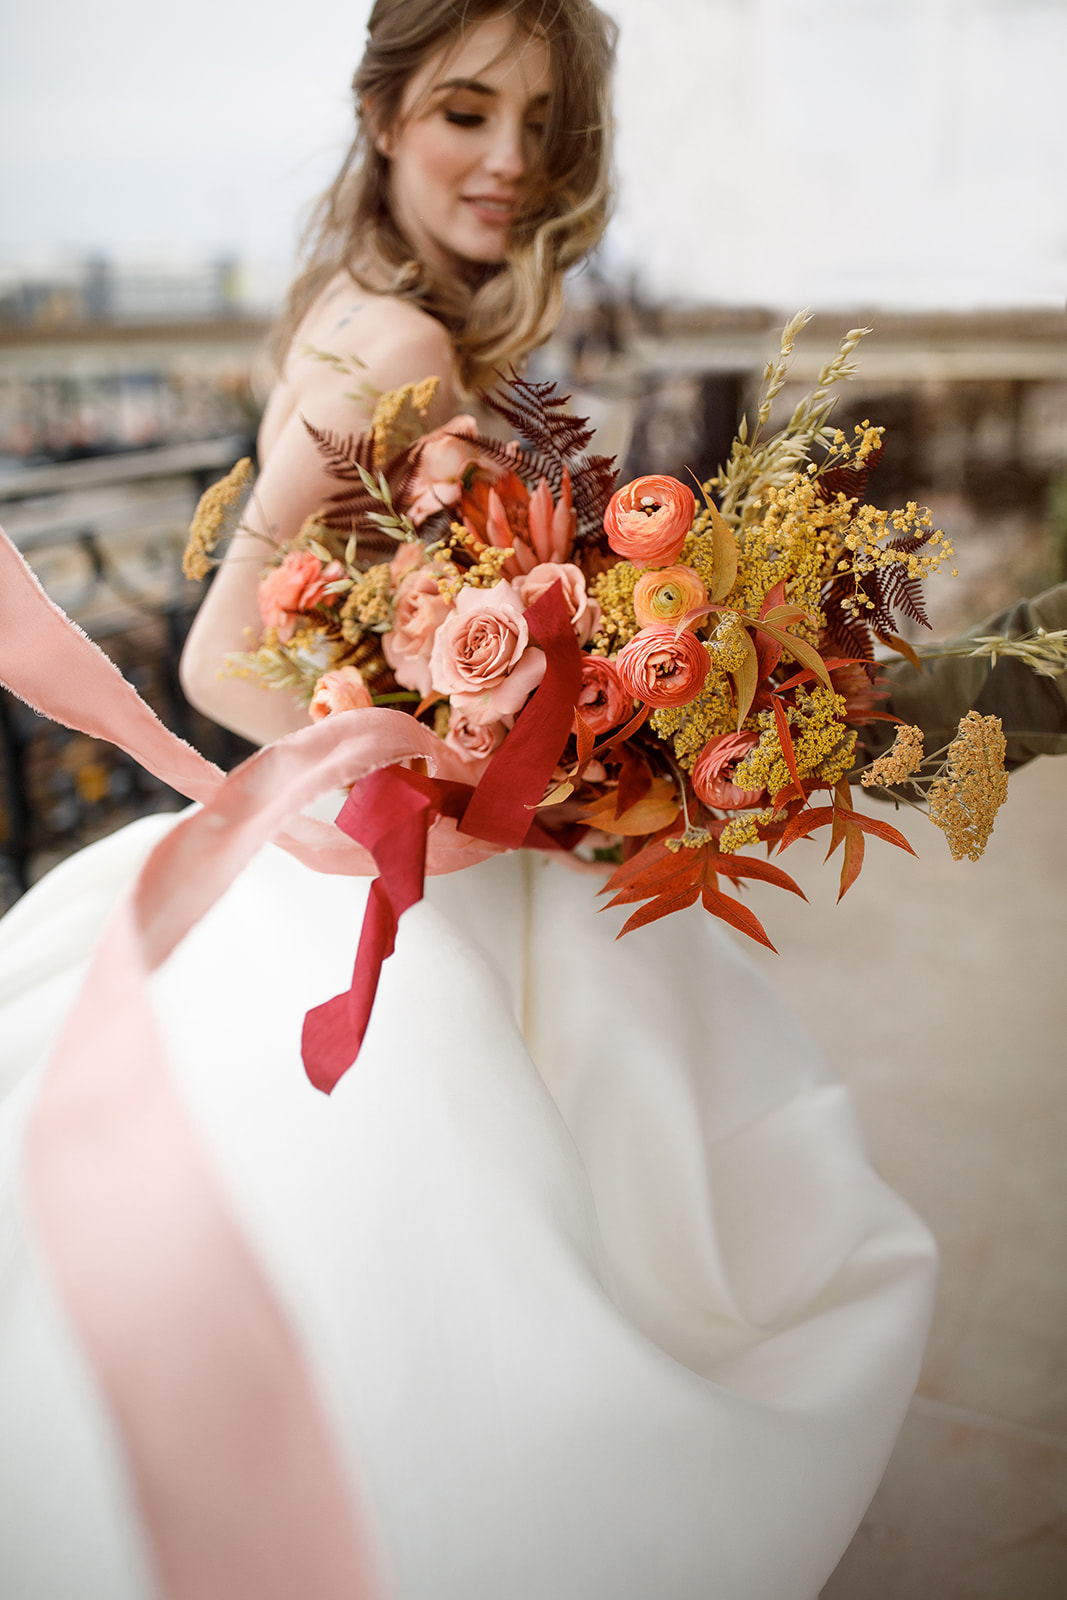 Courtney Davidson Wedding Photography featured on Nashville Bride Guide